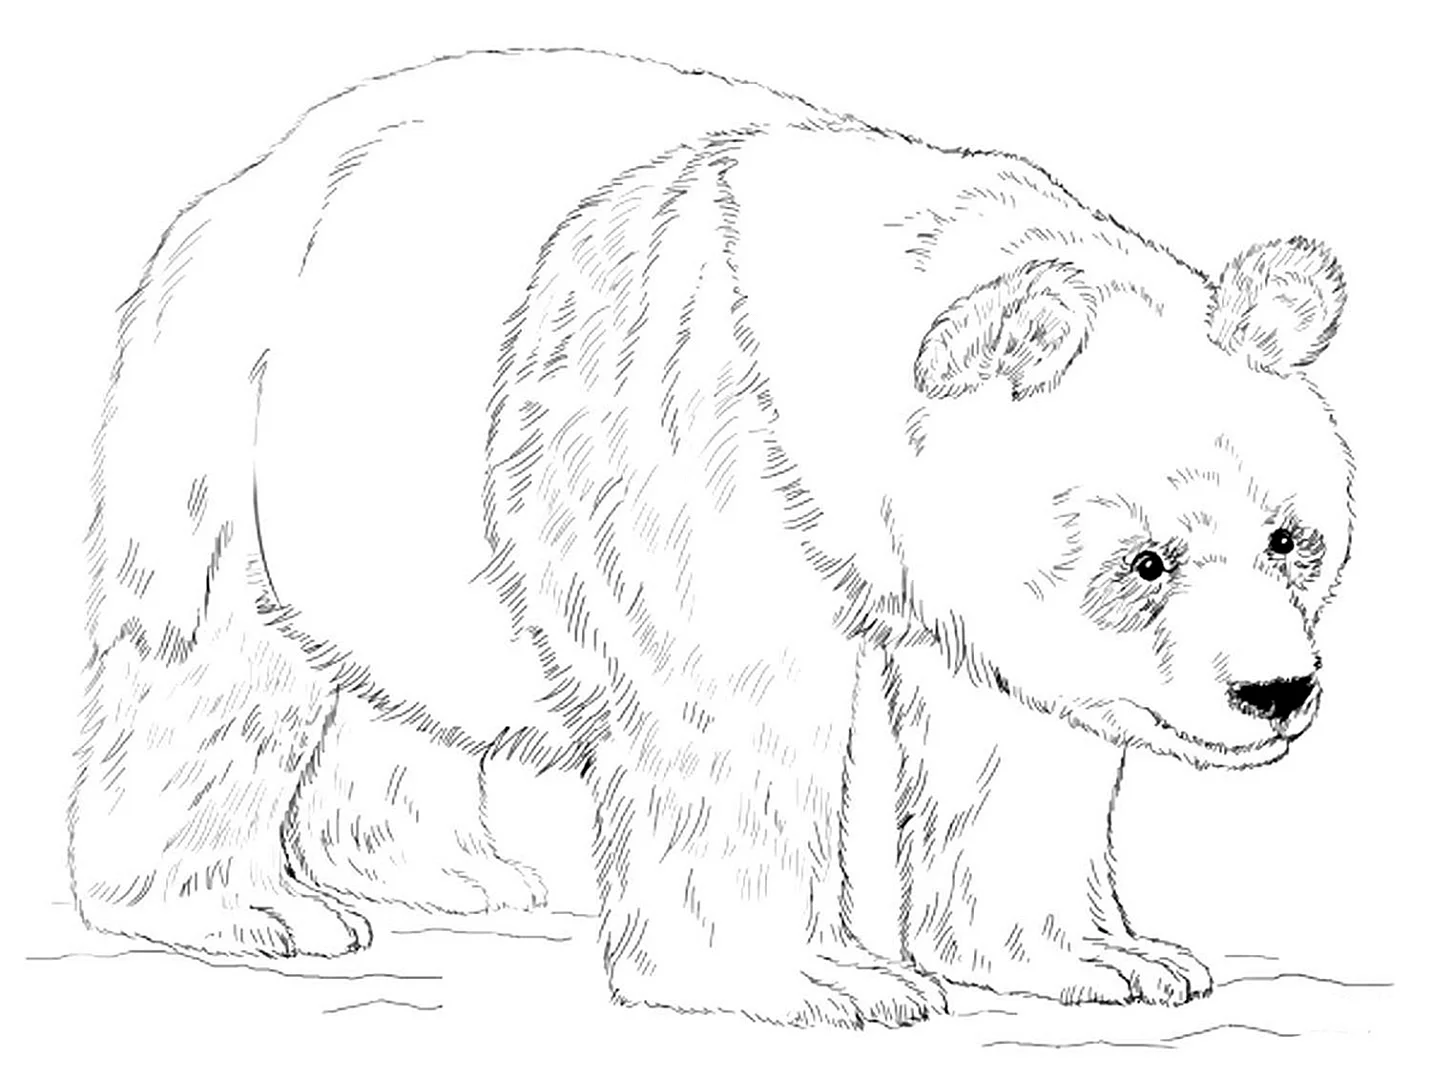 Медведь раскраска